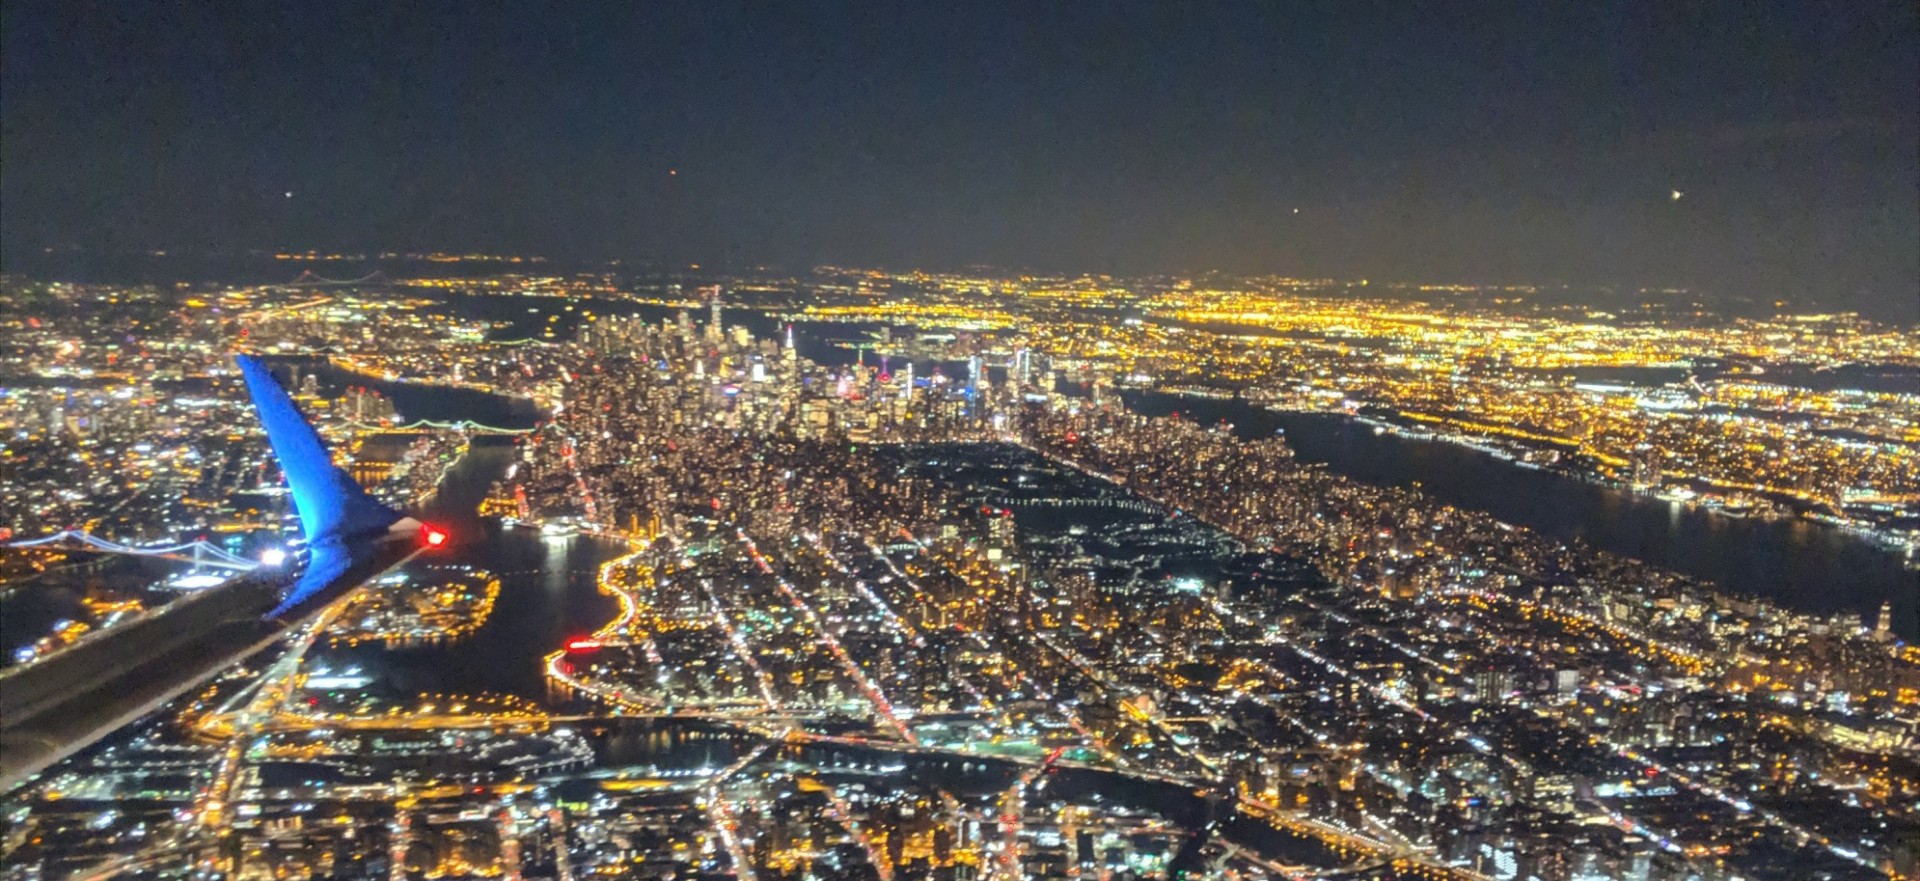 New York at night - credit Luke Schiferl